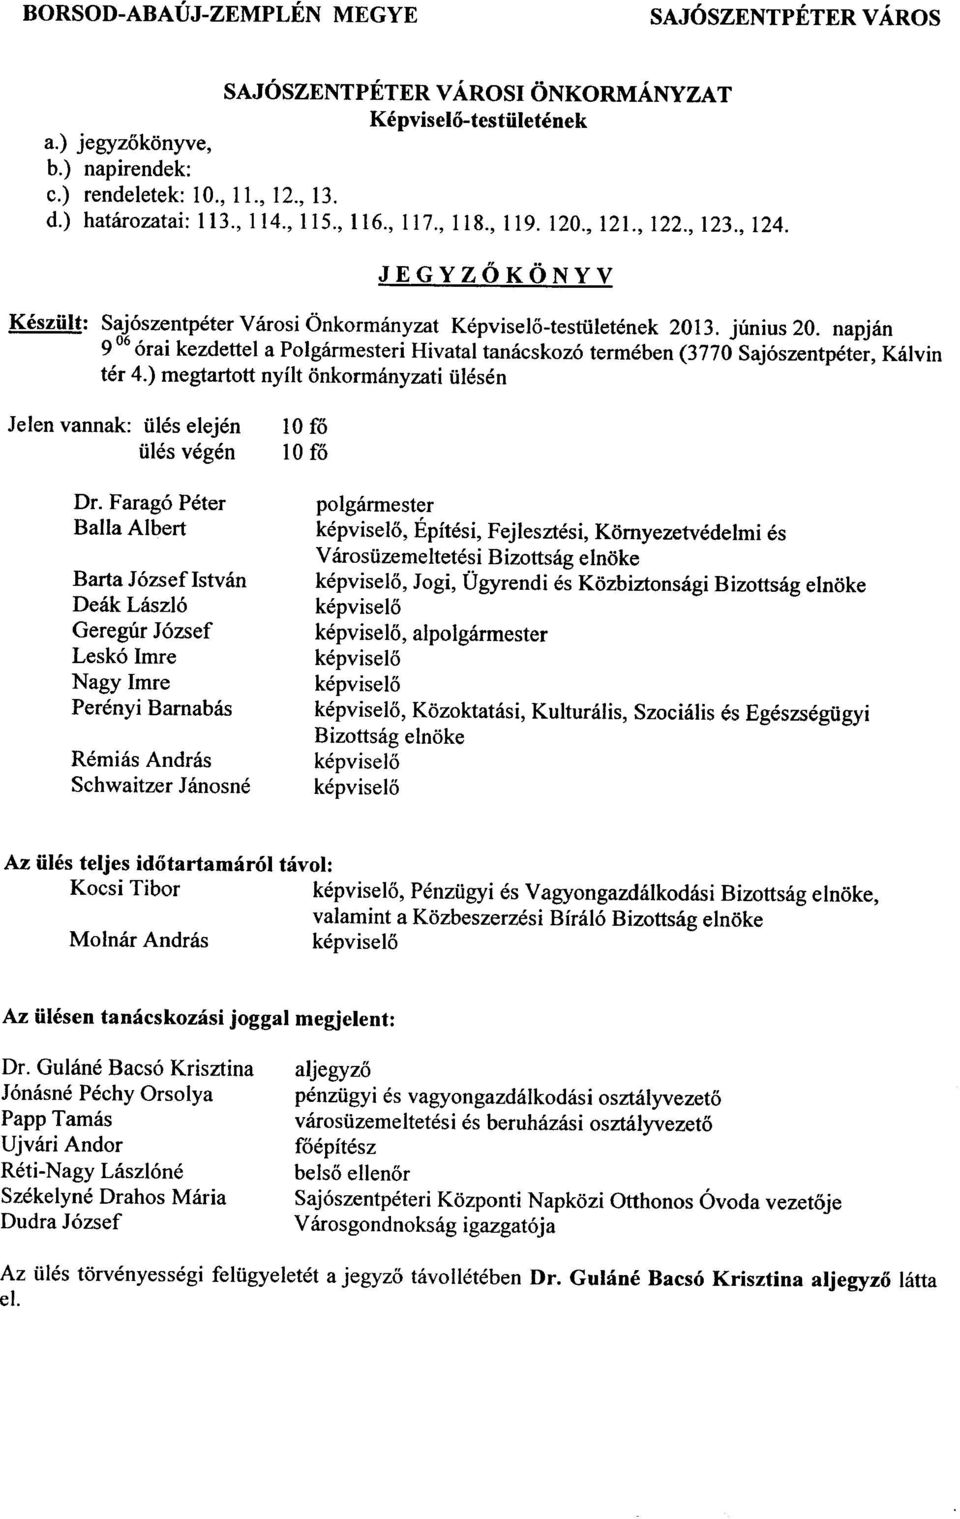 napjan 9 06 6rai kezdettel a Polgarmesteri Hivatal tanacskoz6 termeben (3770 Saj6szentpeter, Kalvin ter 4.